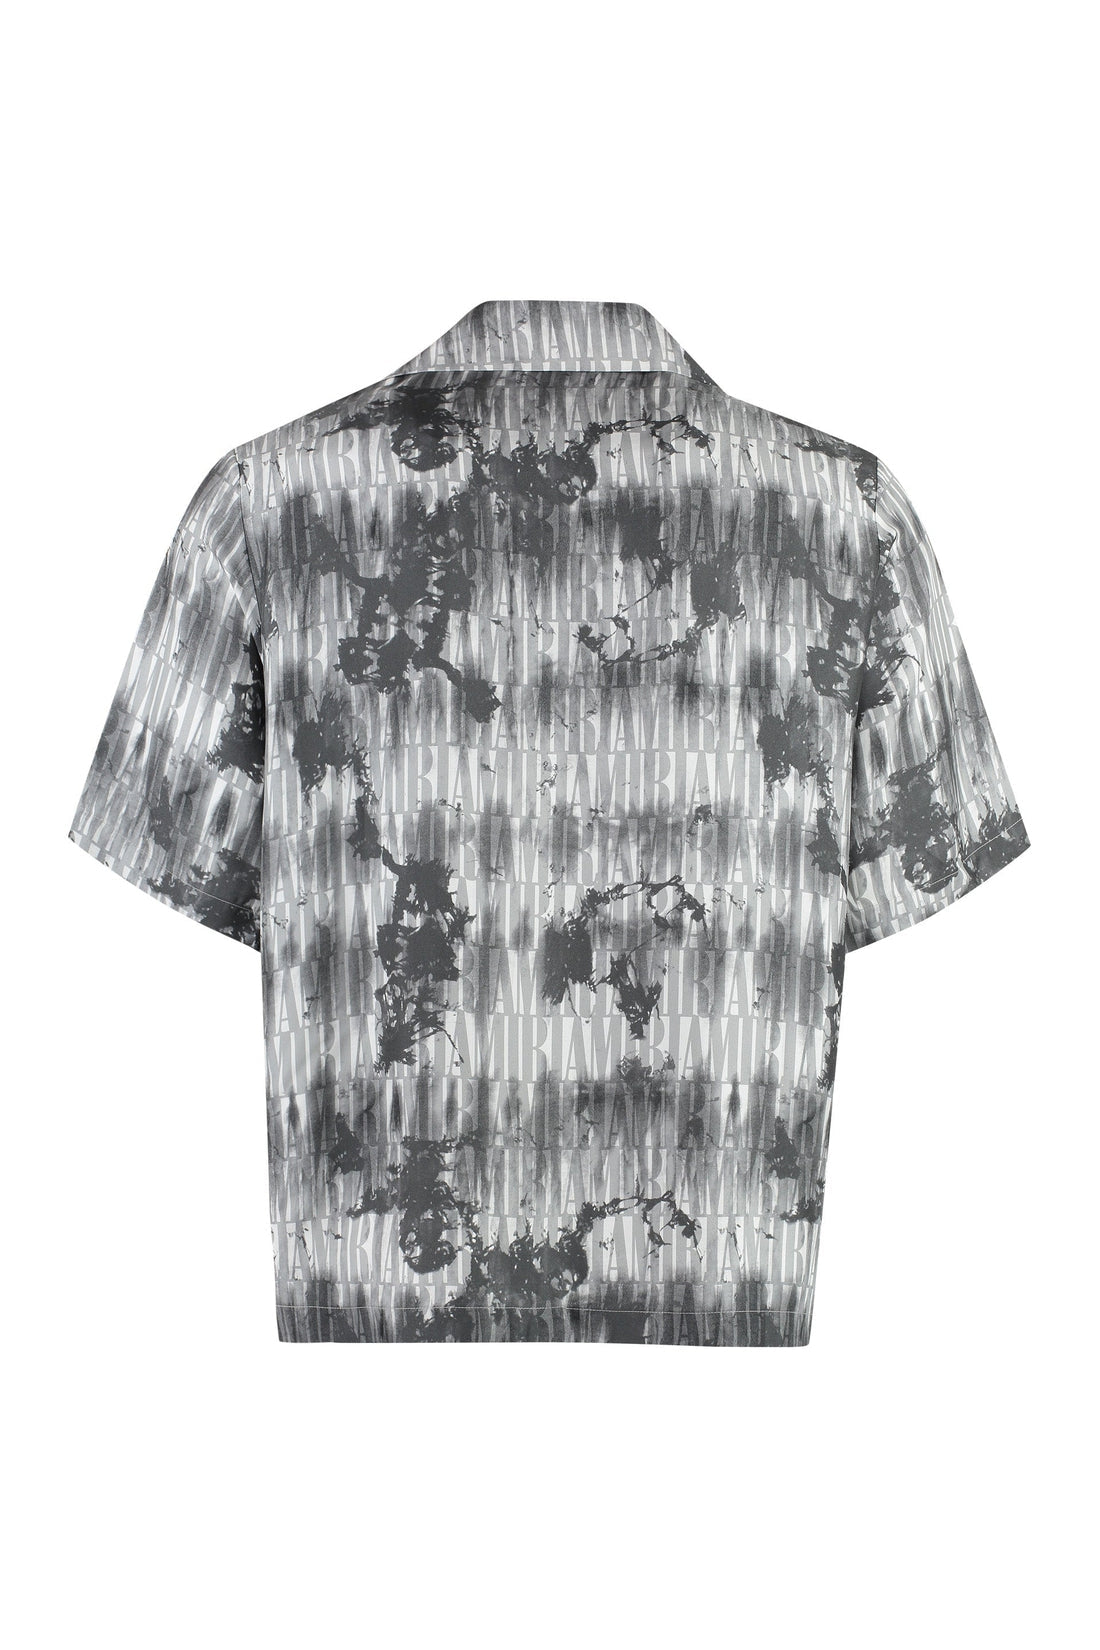 AMIRI-OUTLET-SALE-Printed silk shirt-ARCHIVIST